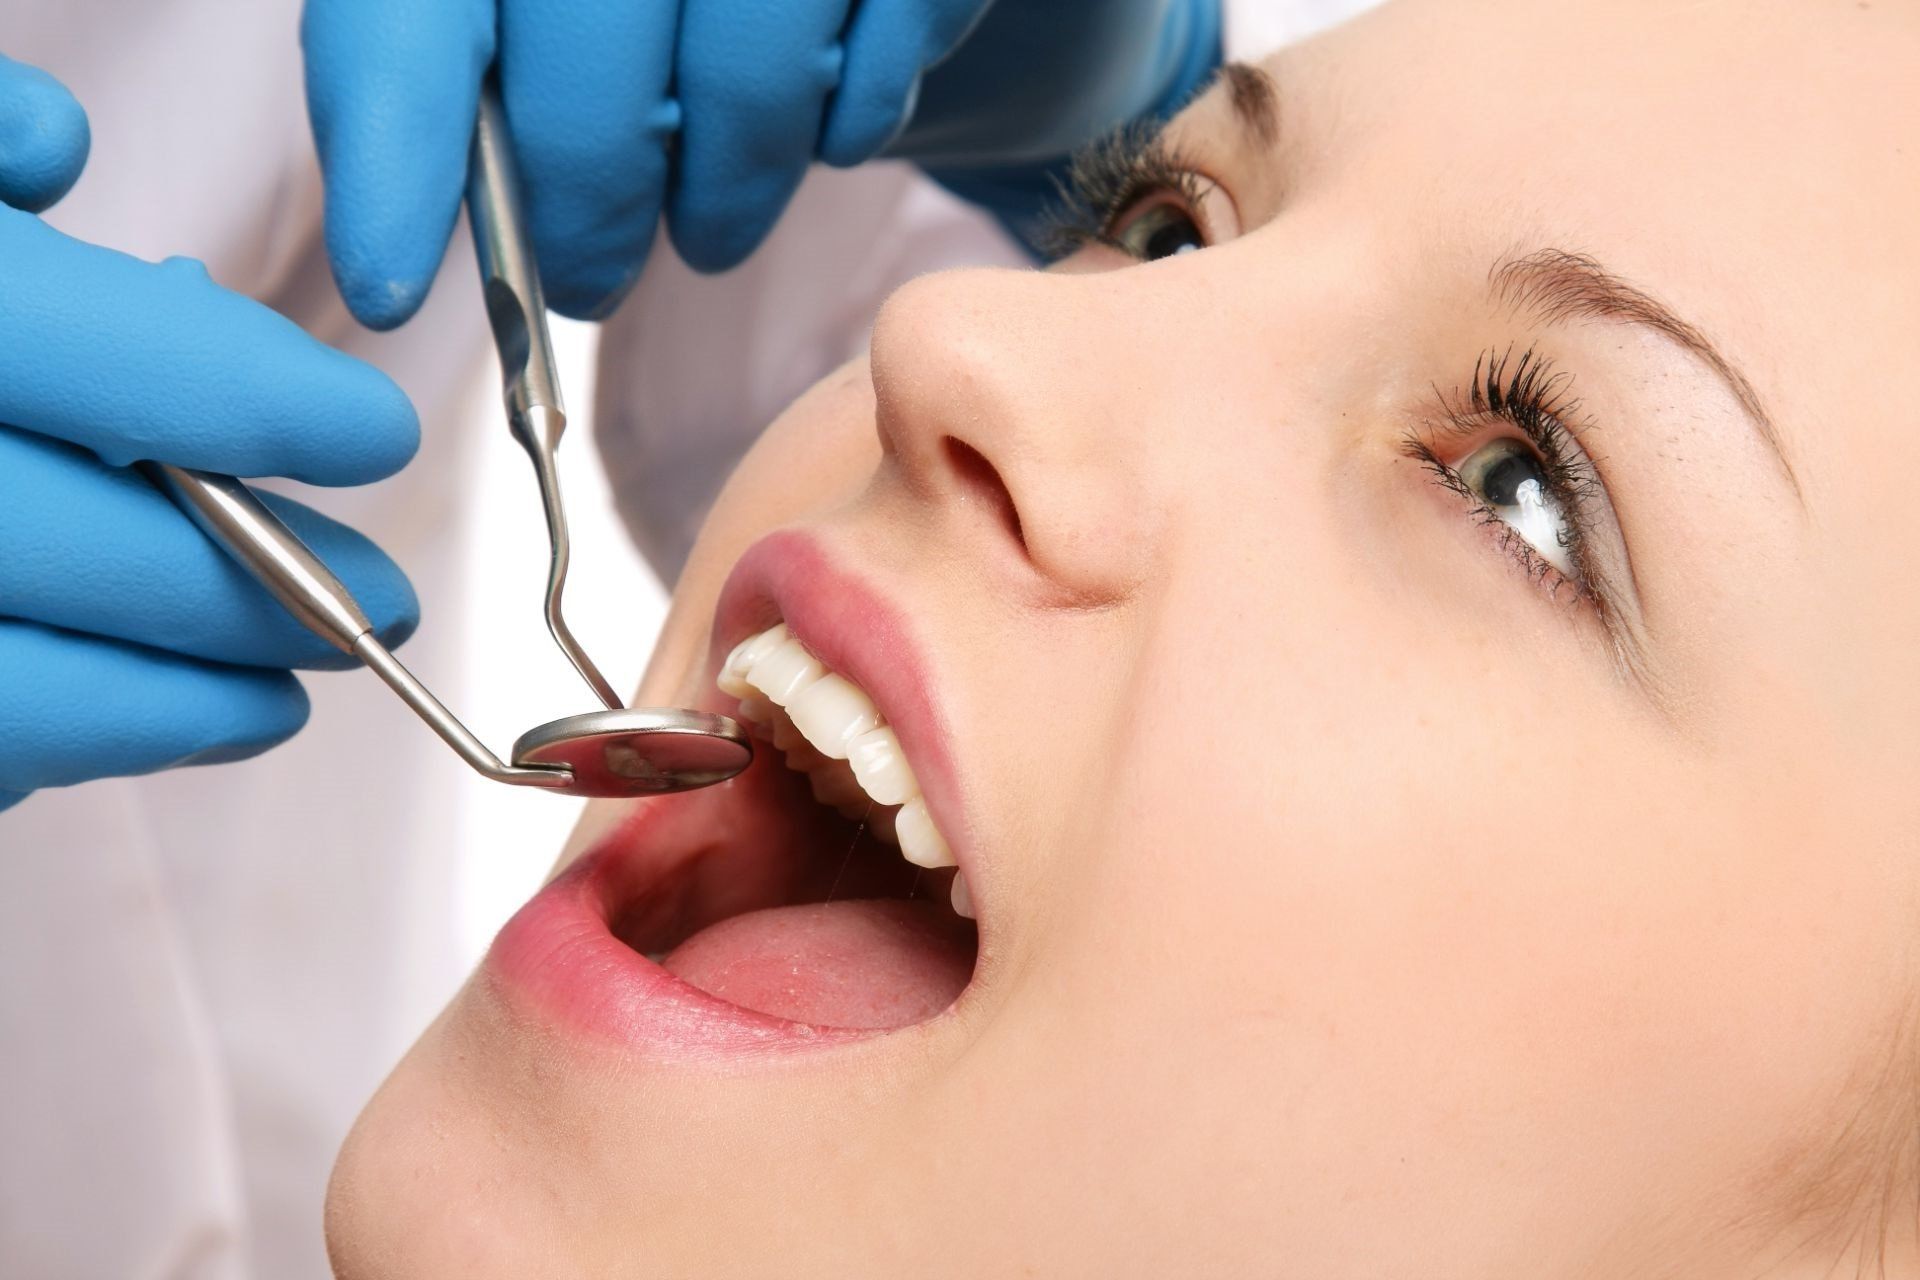 Dentist examining teeth of woman